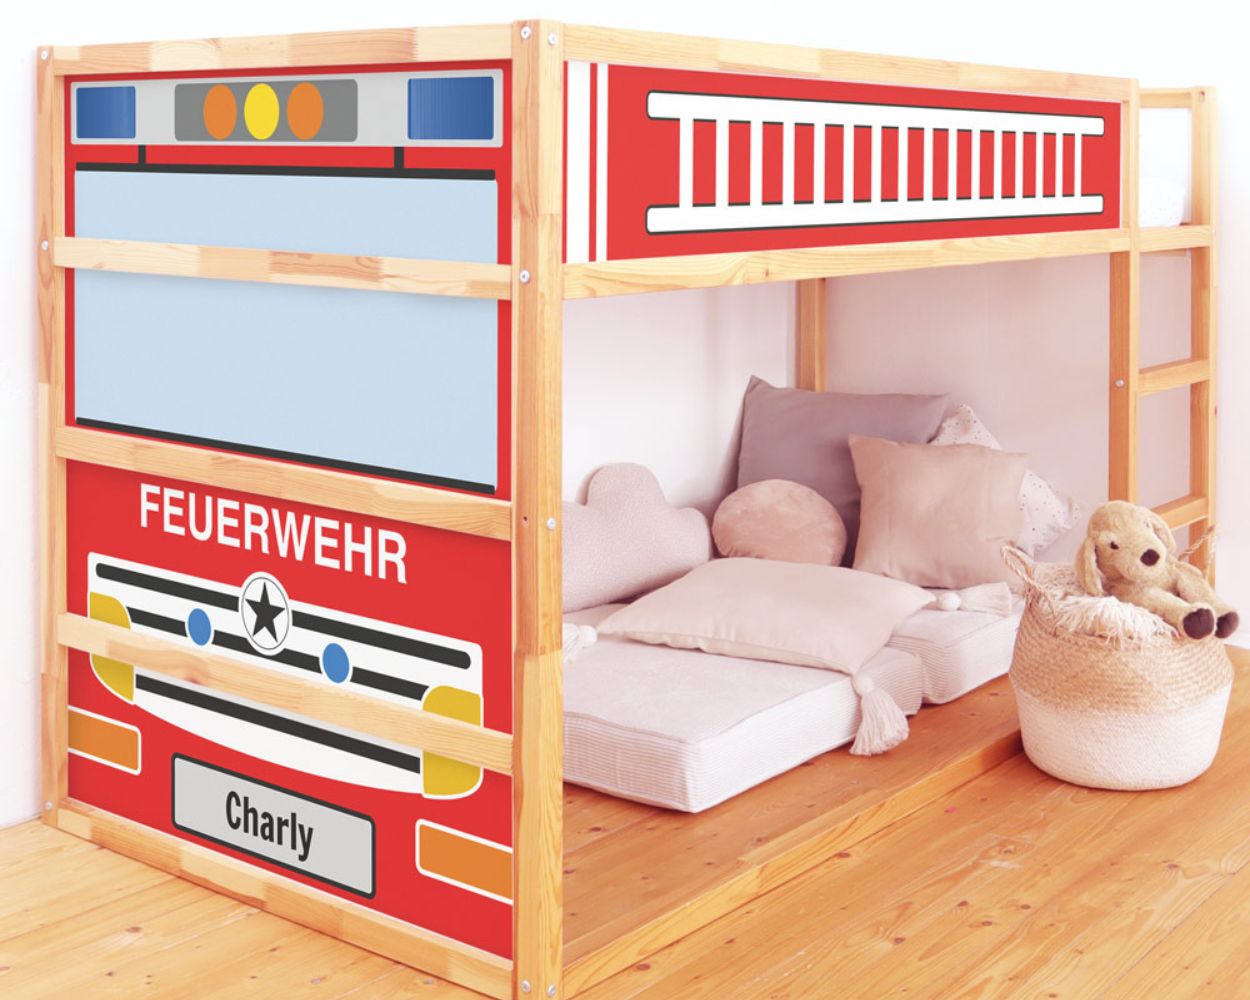 Feuerwehr Kinderzimmer IKEA Hochbett Kura